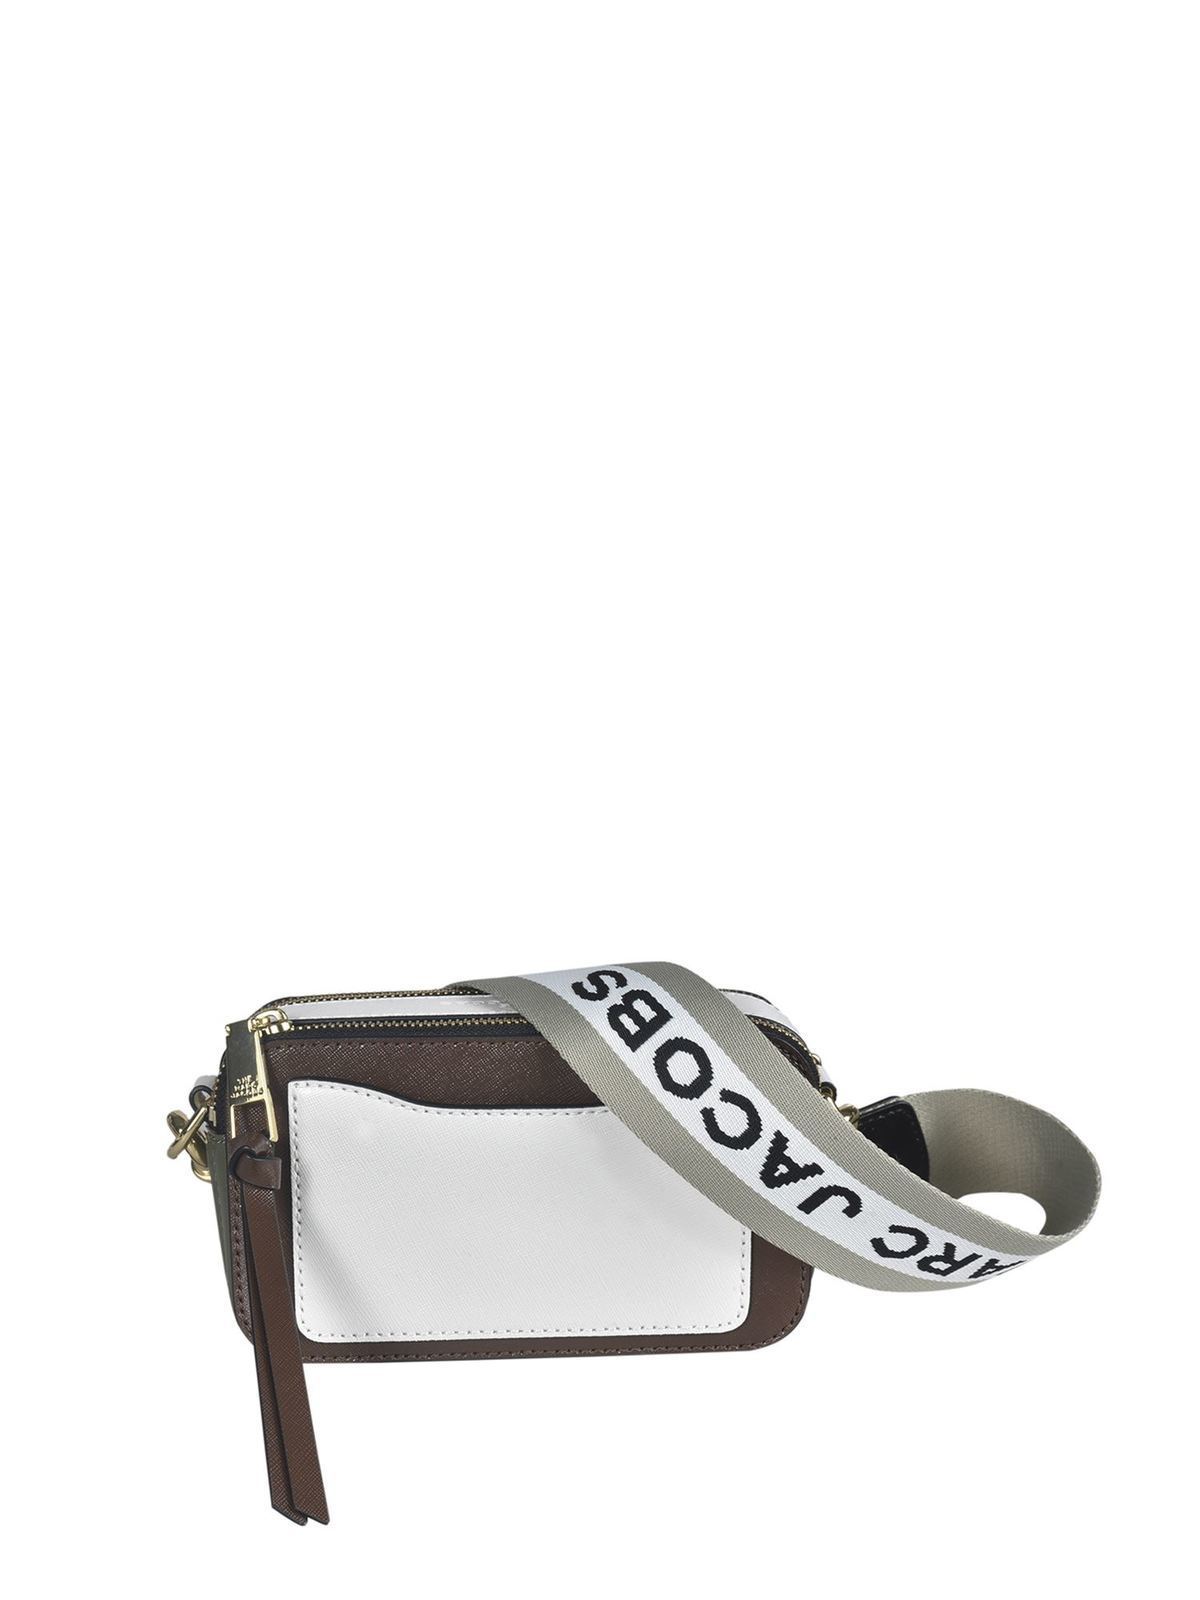 Marc Jacobs The Logo Strap Snapshot Shoulder Bag - brown/white